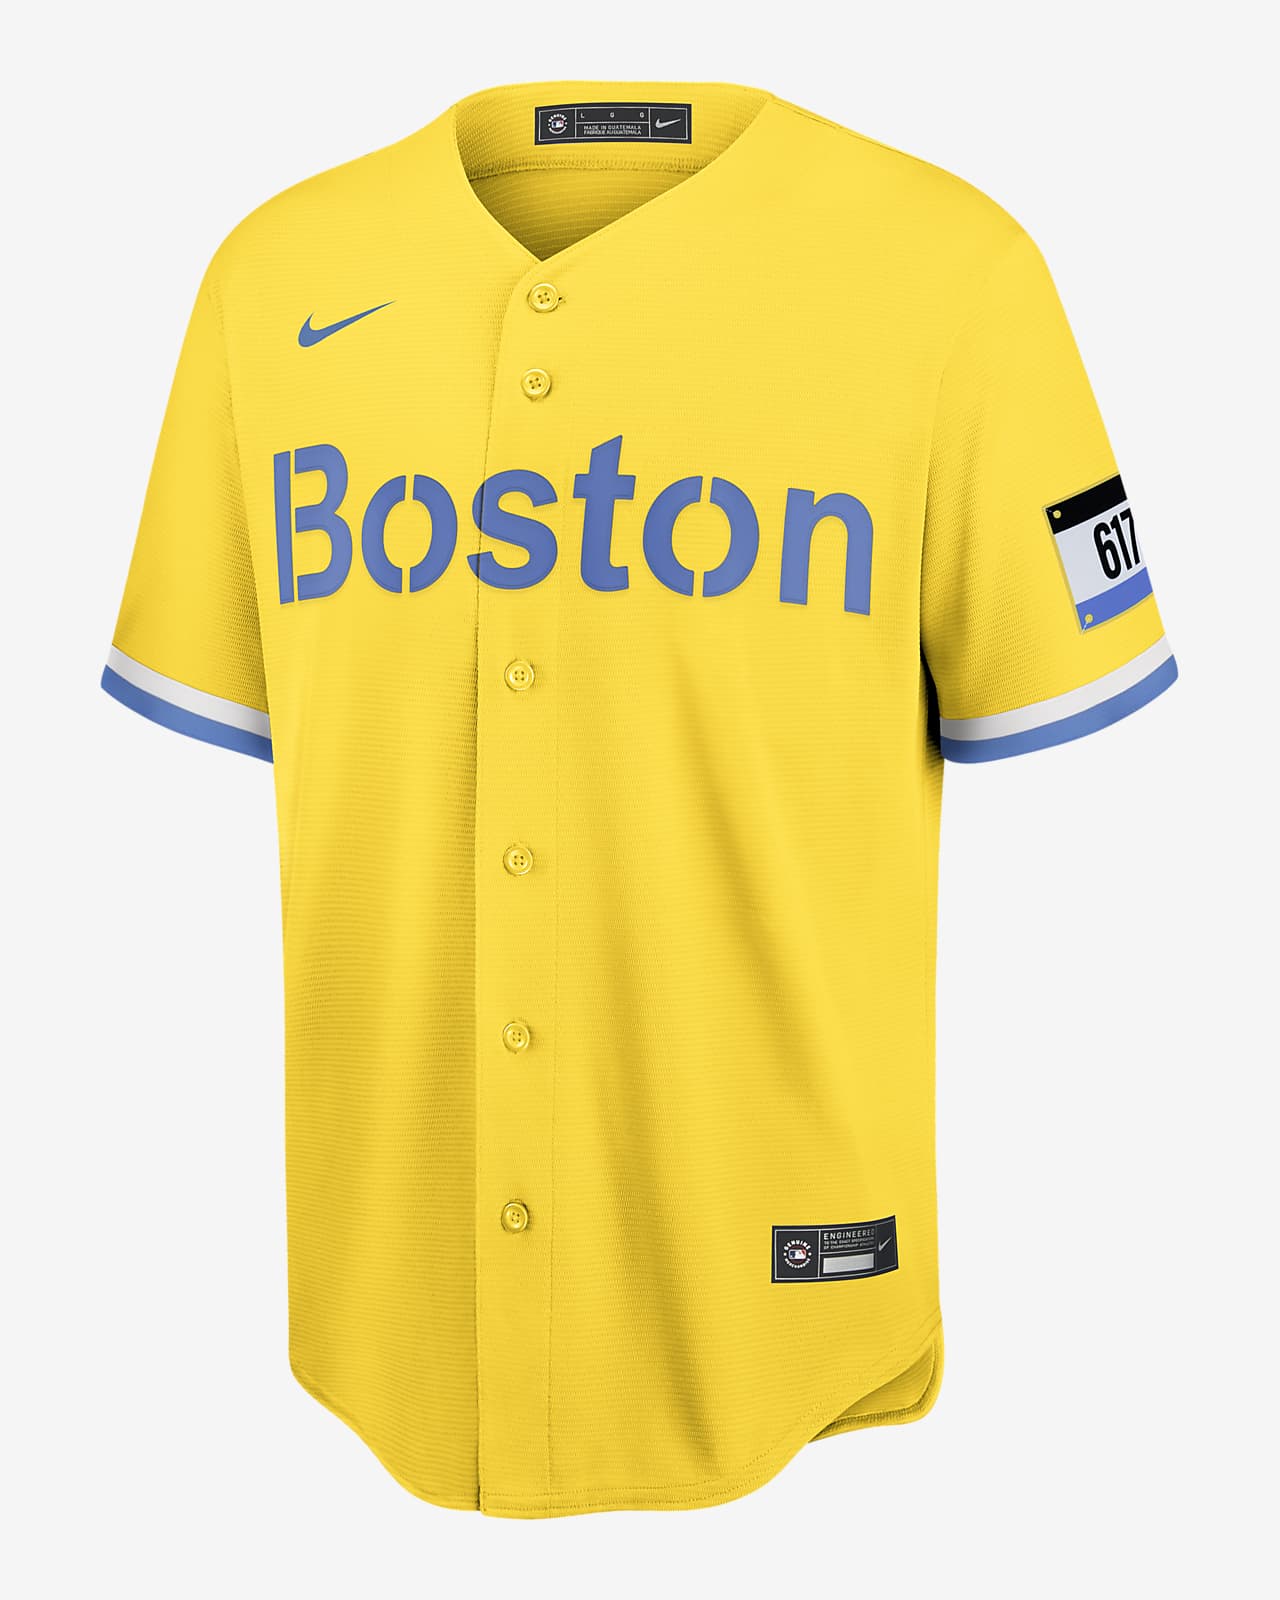 boston baseball uniforms